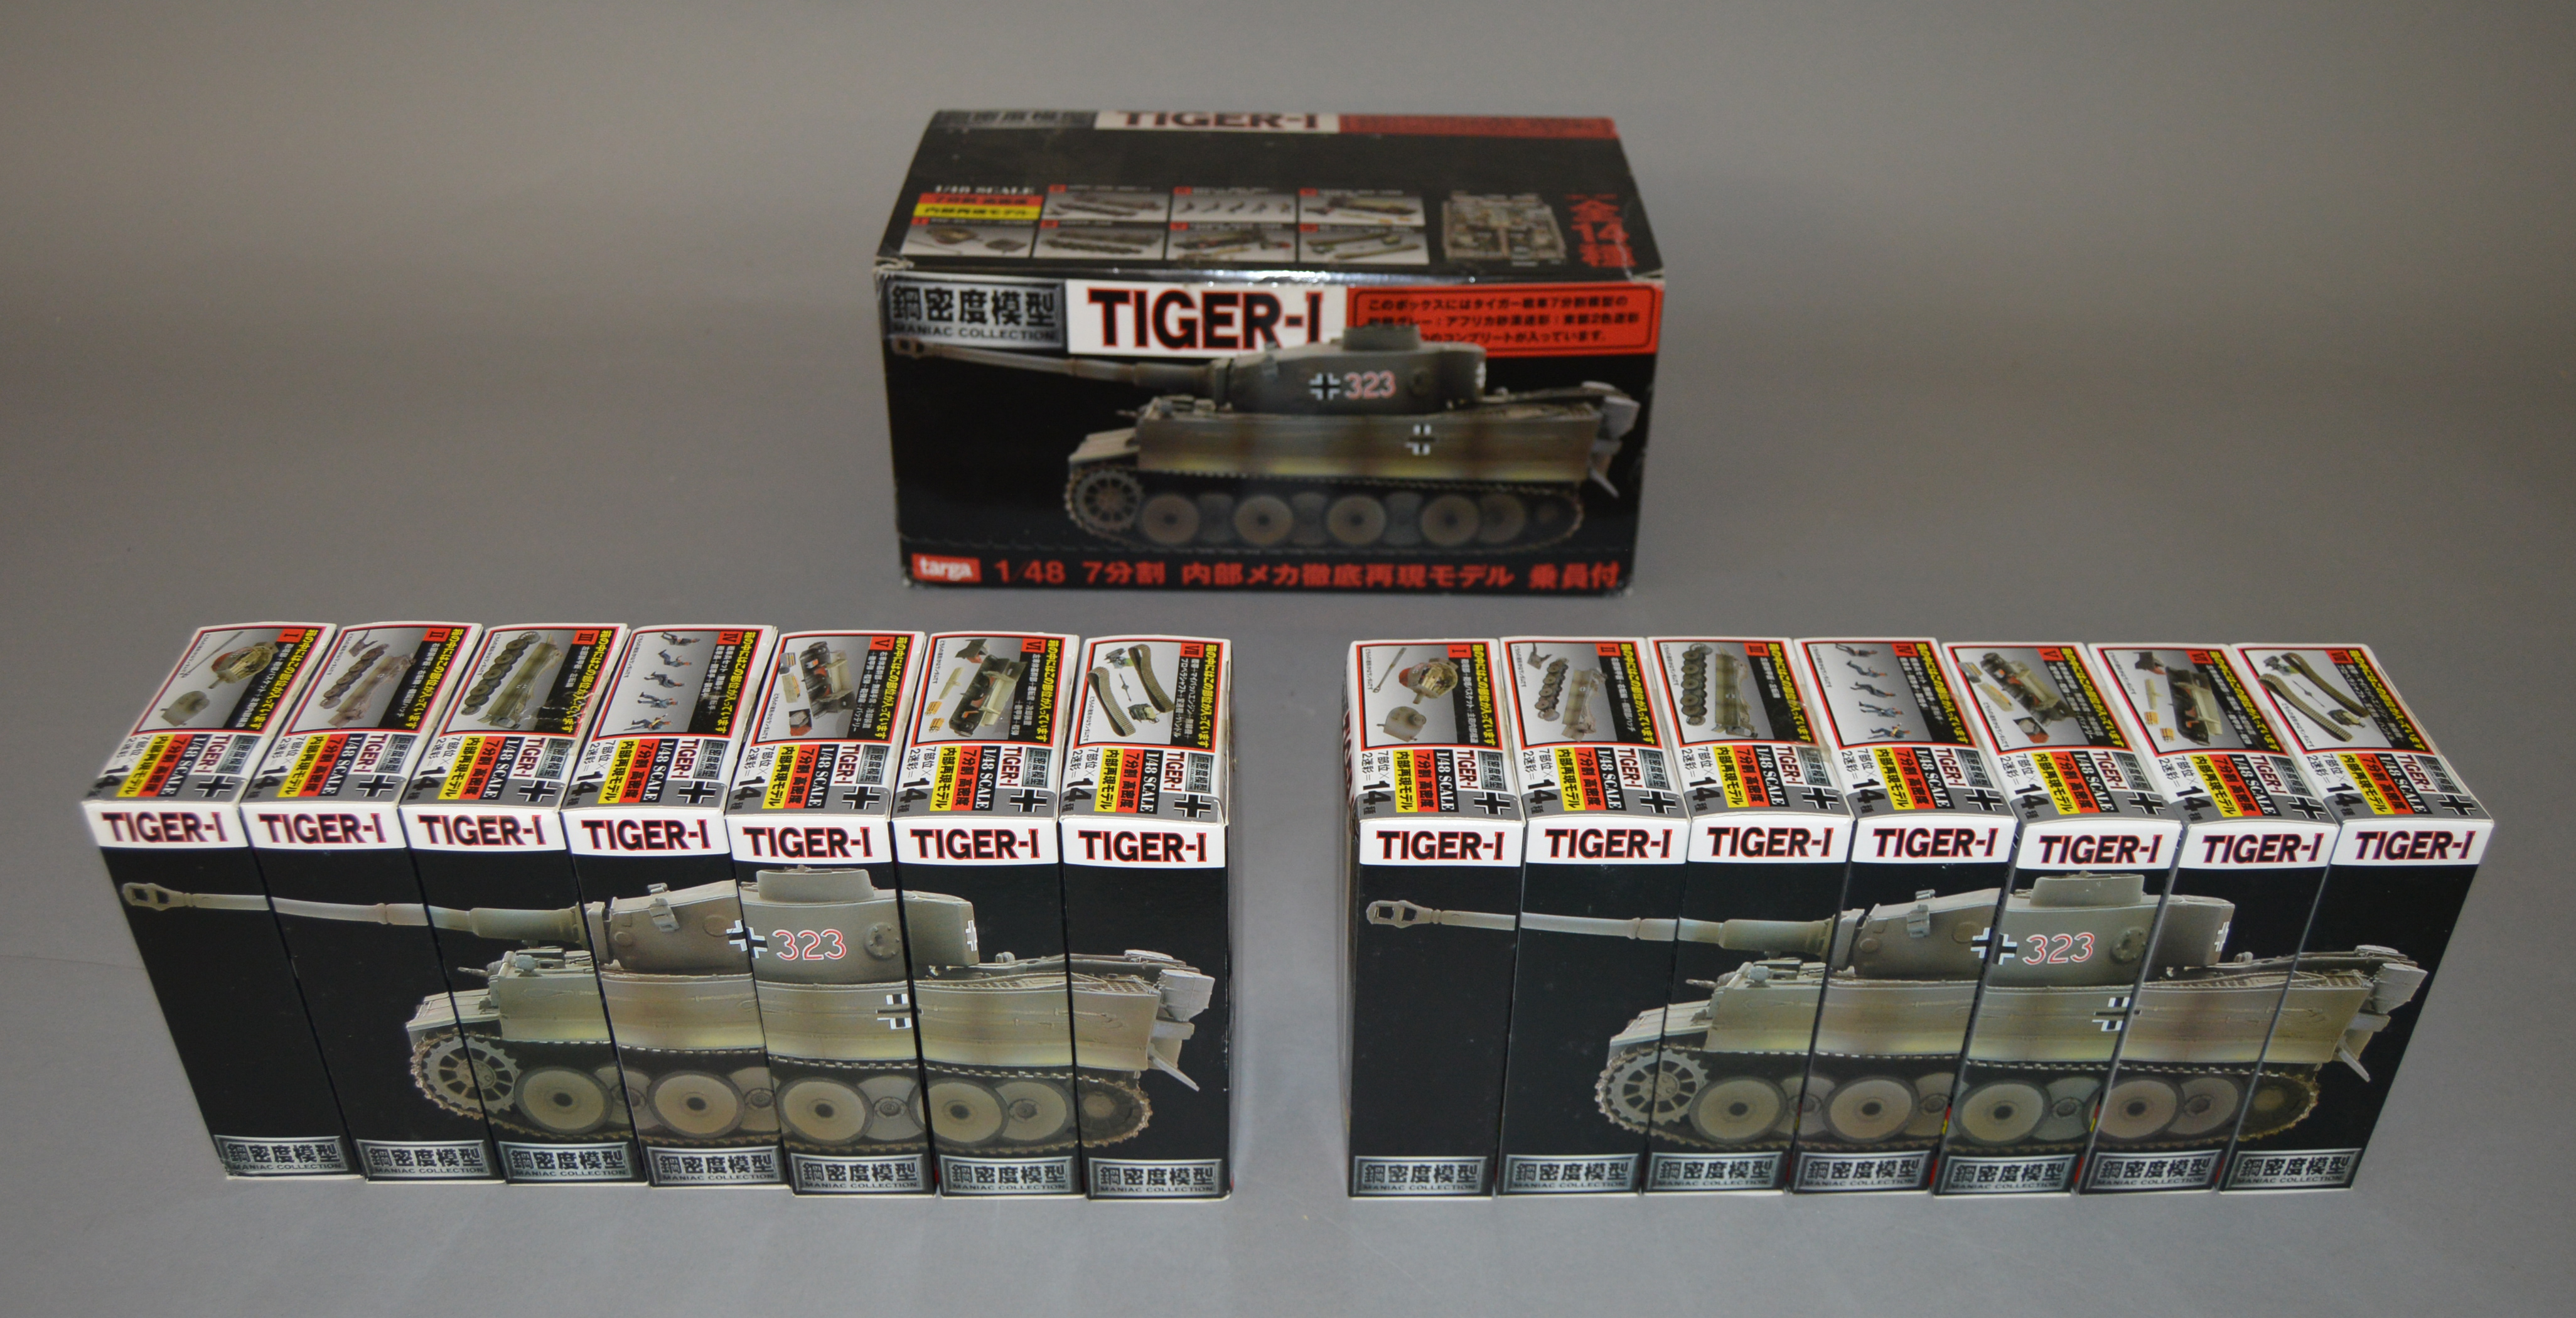 Targa 1:48 scale. 2 x complete Tiger-1 tank kits. In trade dispenser.